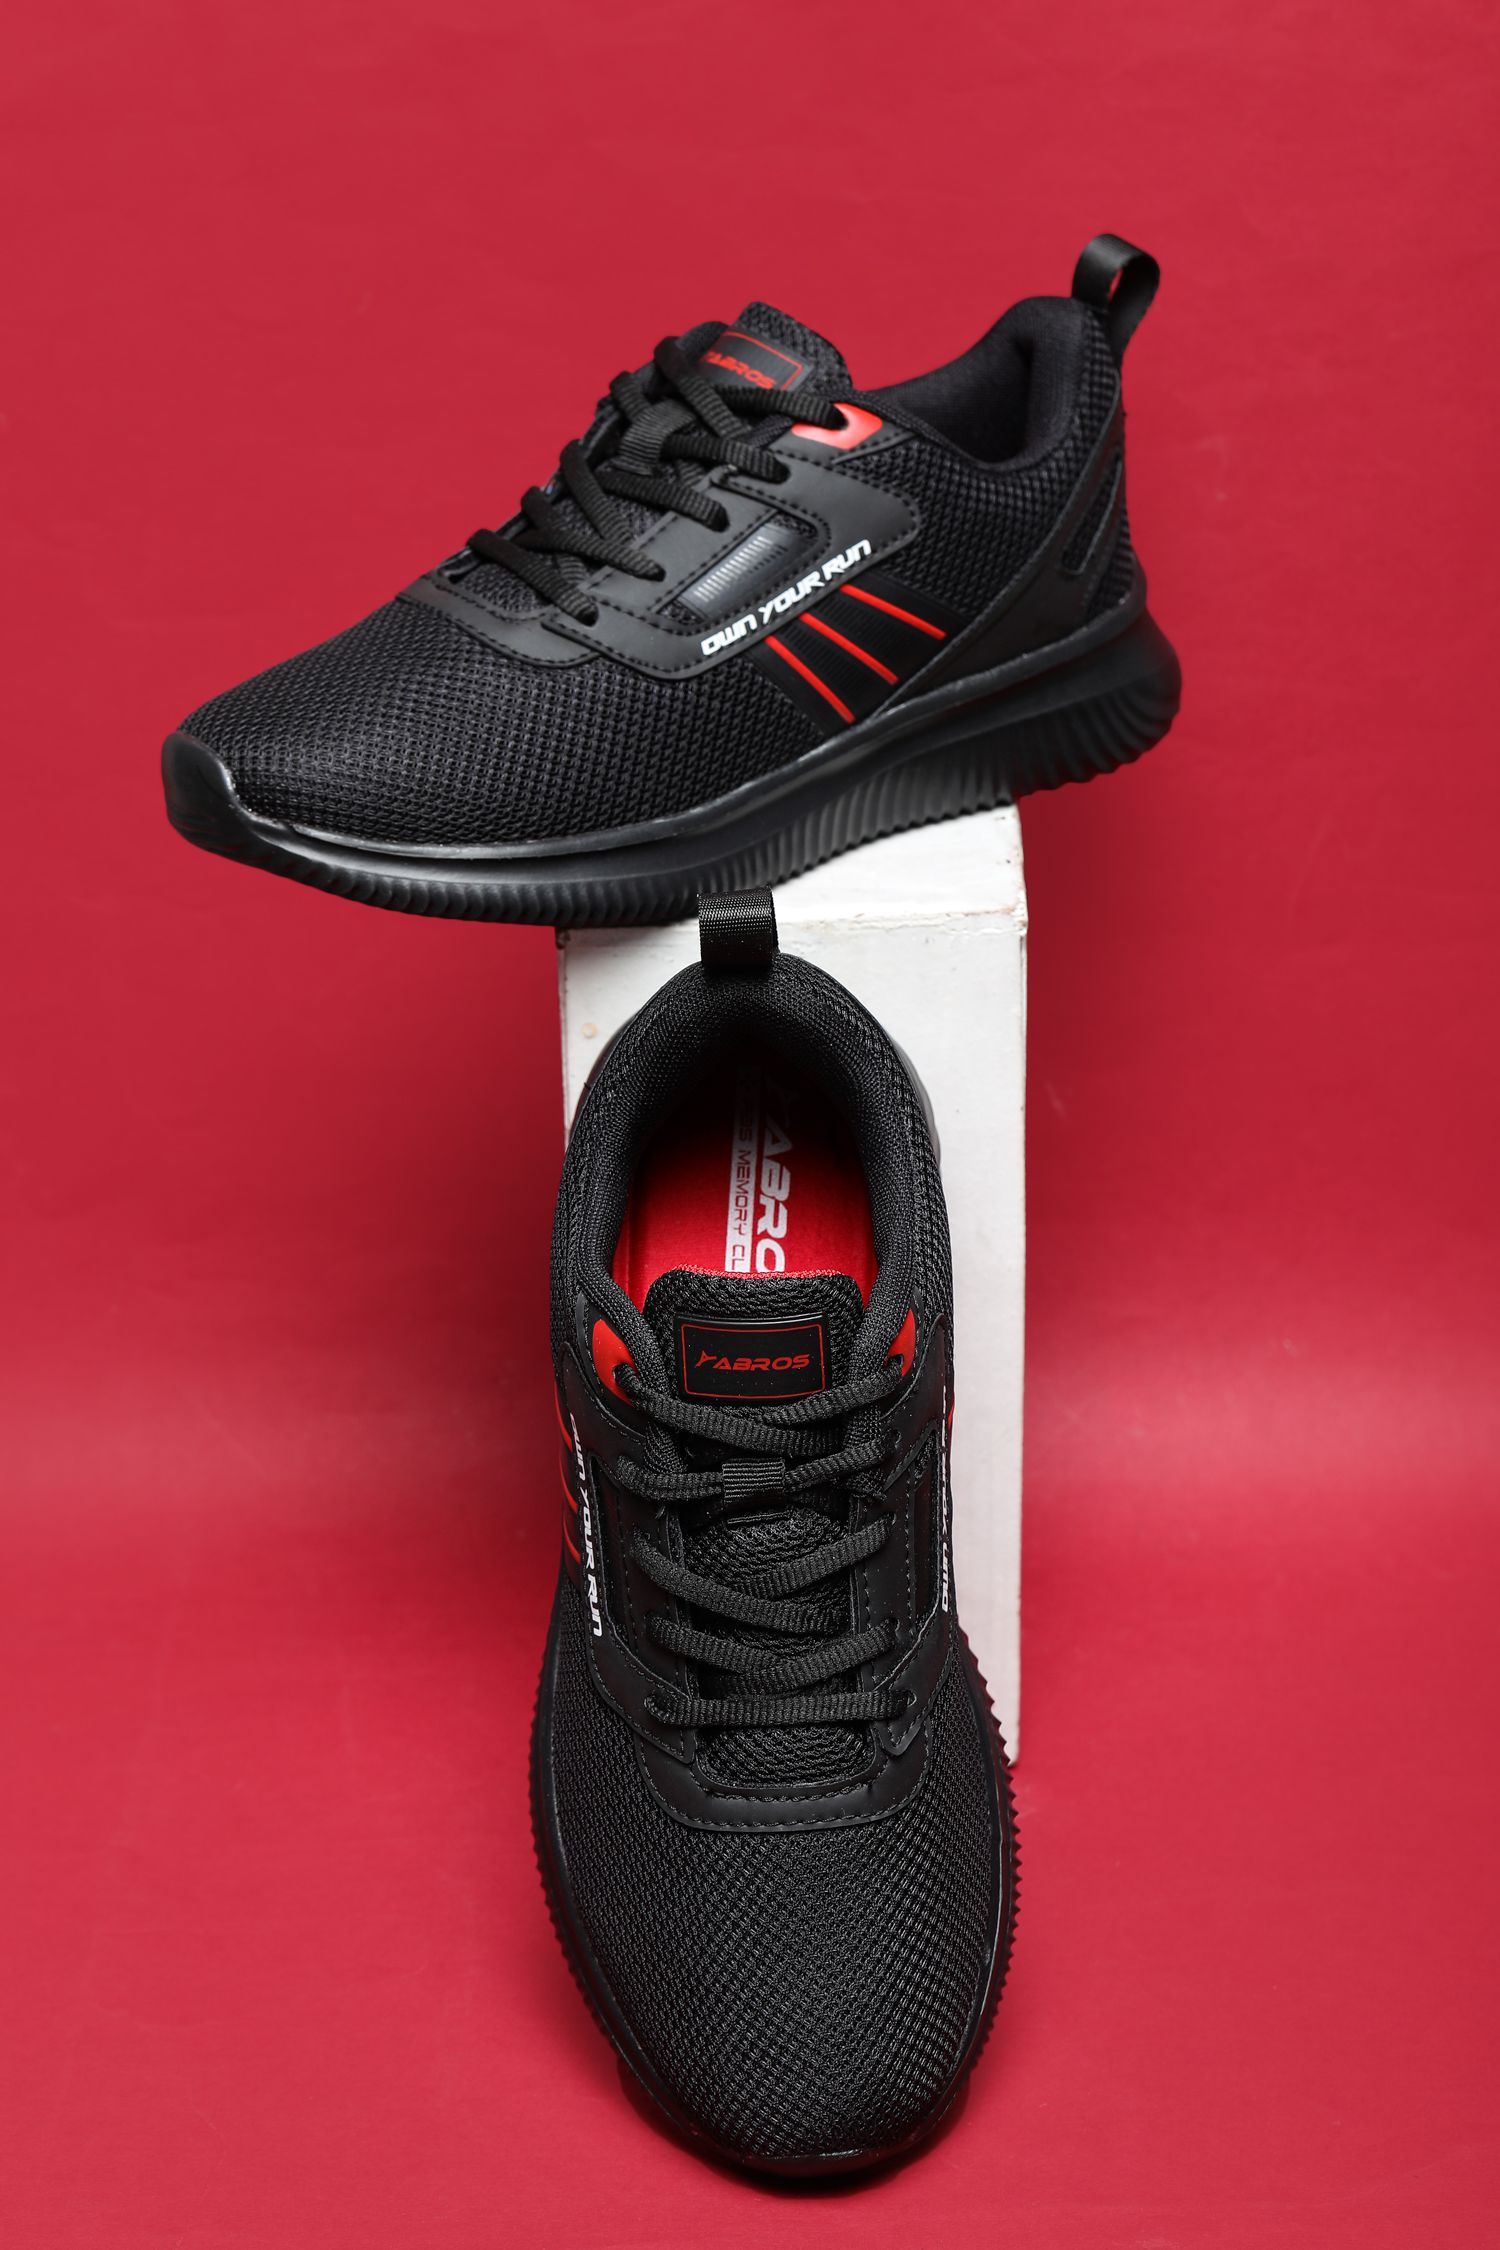     			Abros CHRIS Black Men's Sports Running Shoes